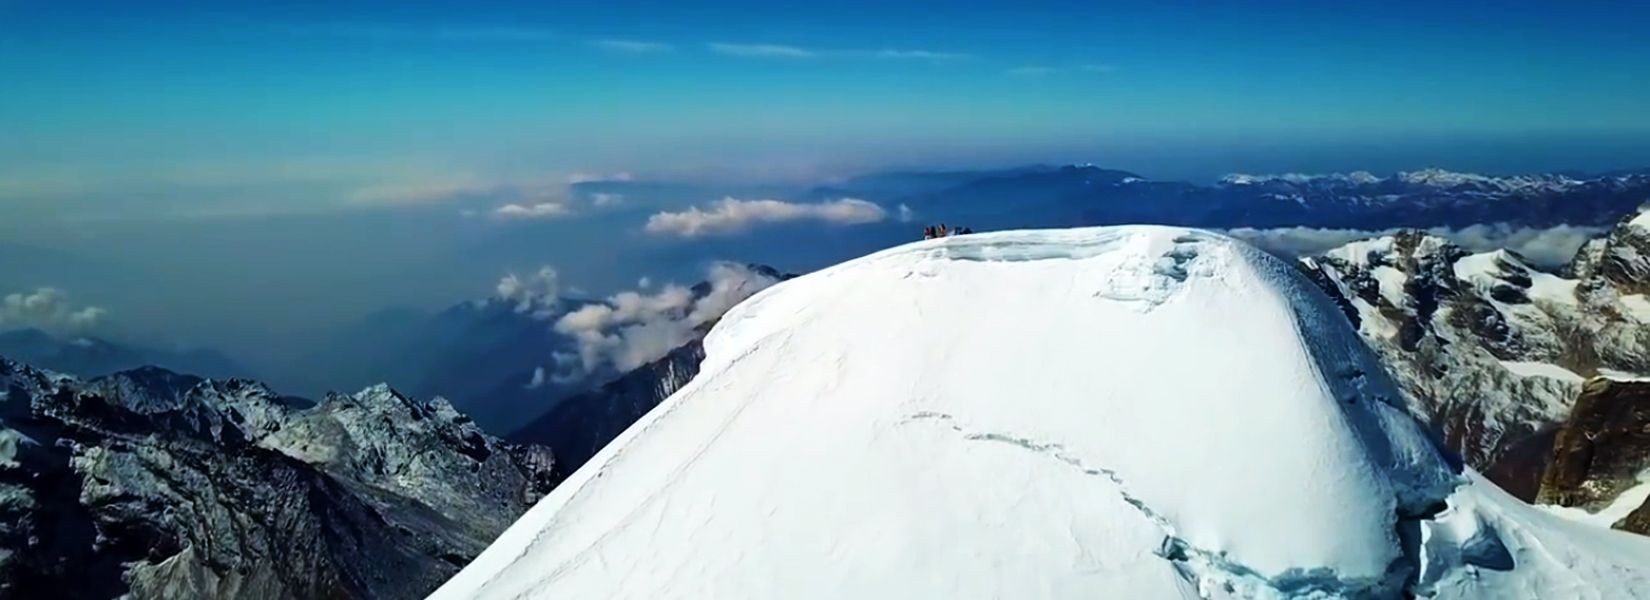 Mera Peak, Mera Peak climbing